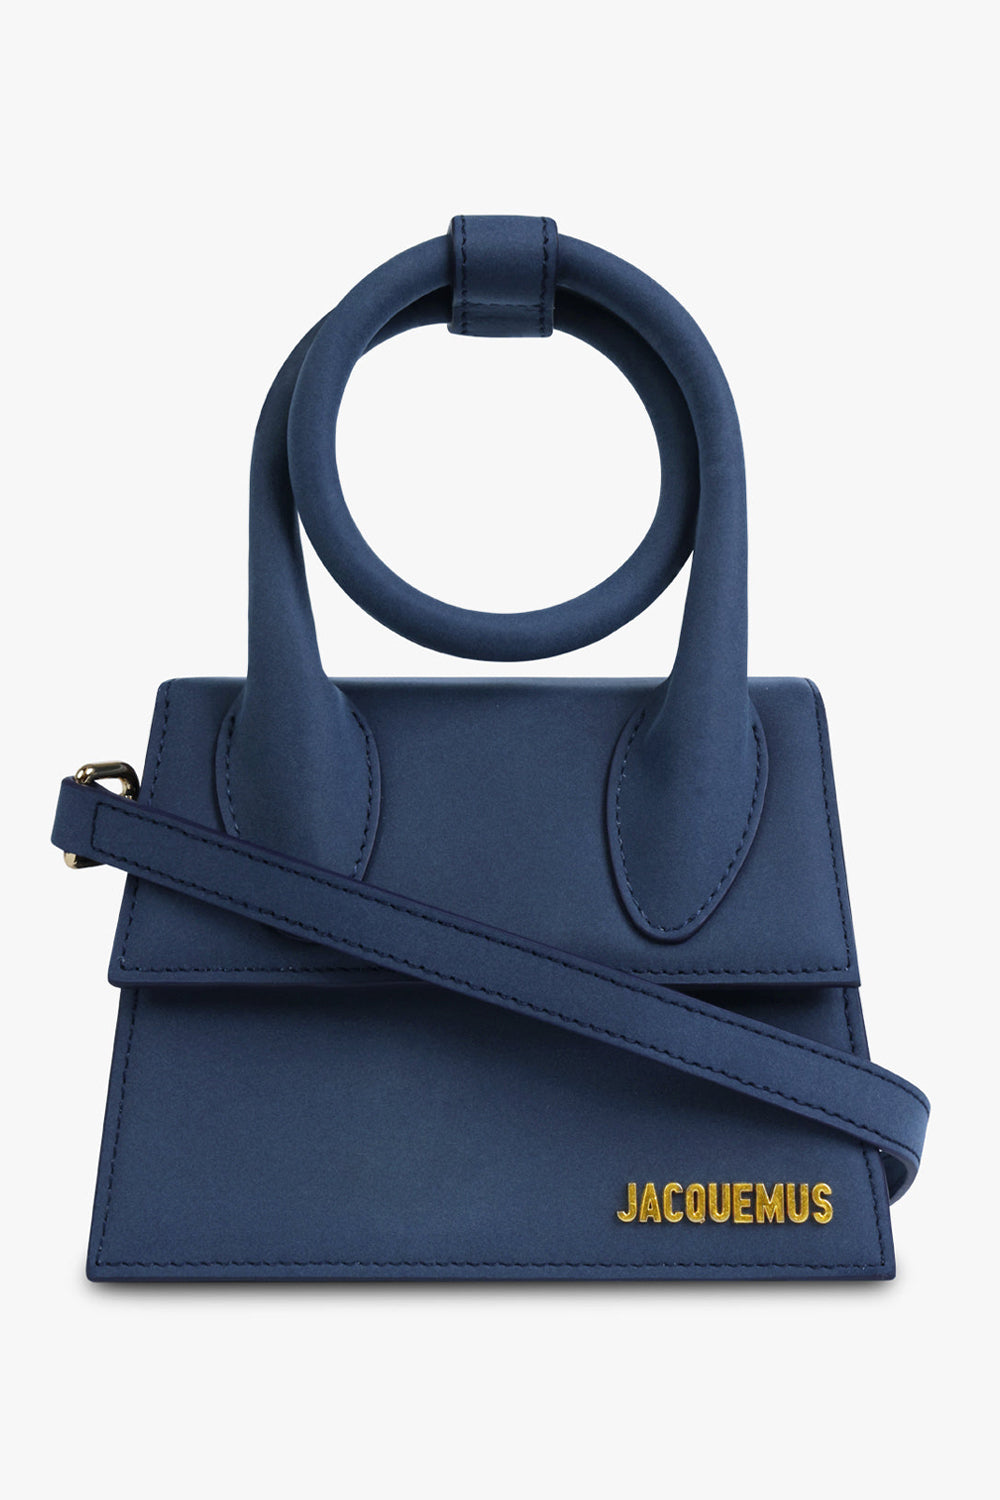 JACQUEMUS BAGS BLUE LE CHIQUITO NOEUD BAG | DARK NAVY